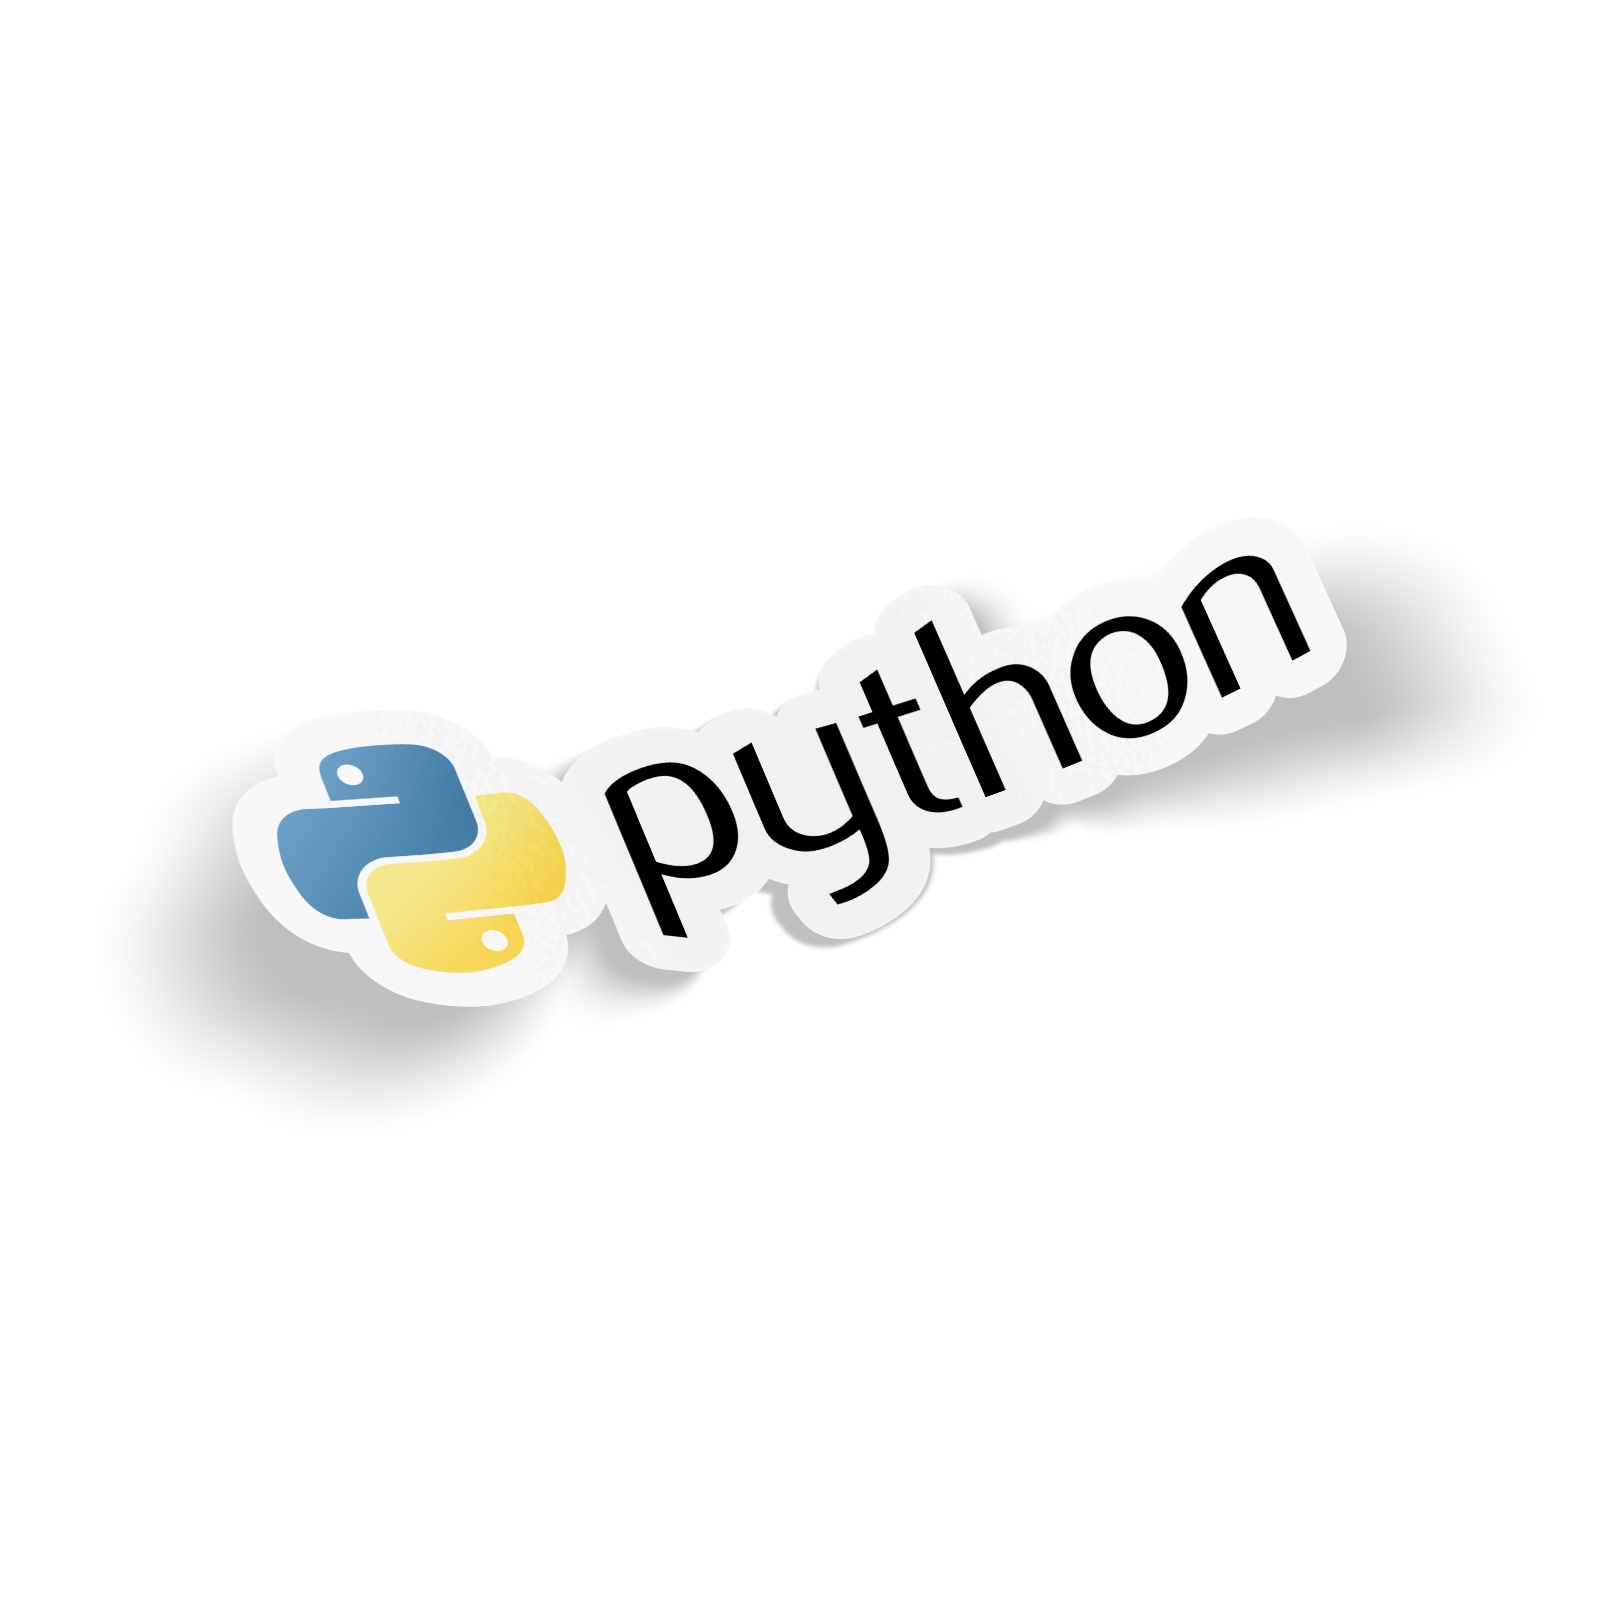 Логотип языка питон. Значок питона. Python логотип. Питон язык программирования лого. Логотип питона без фона.